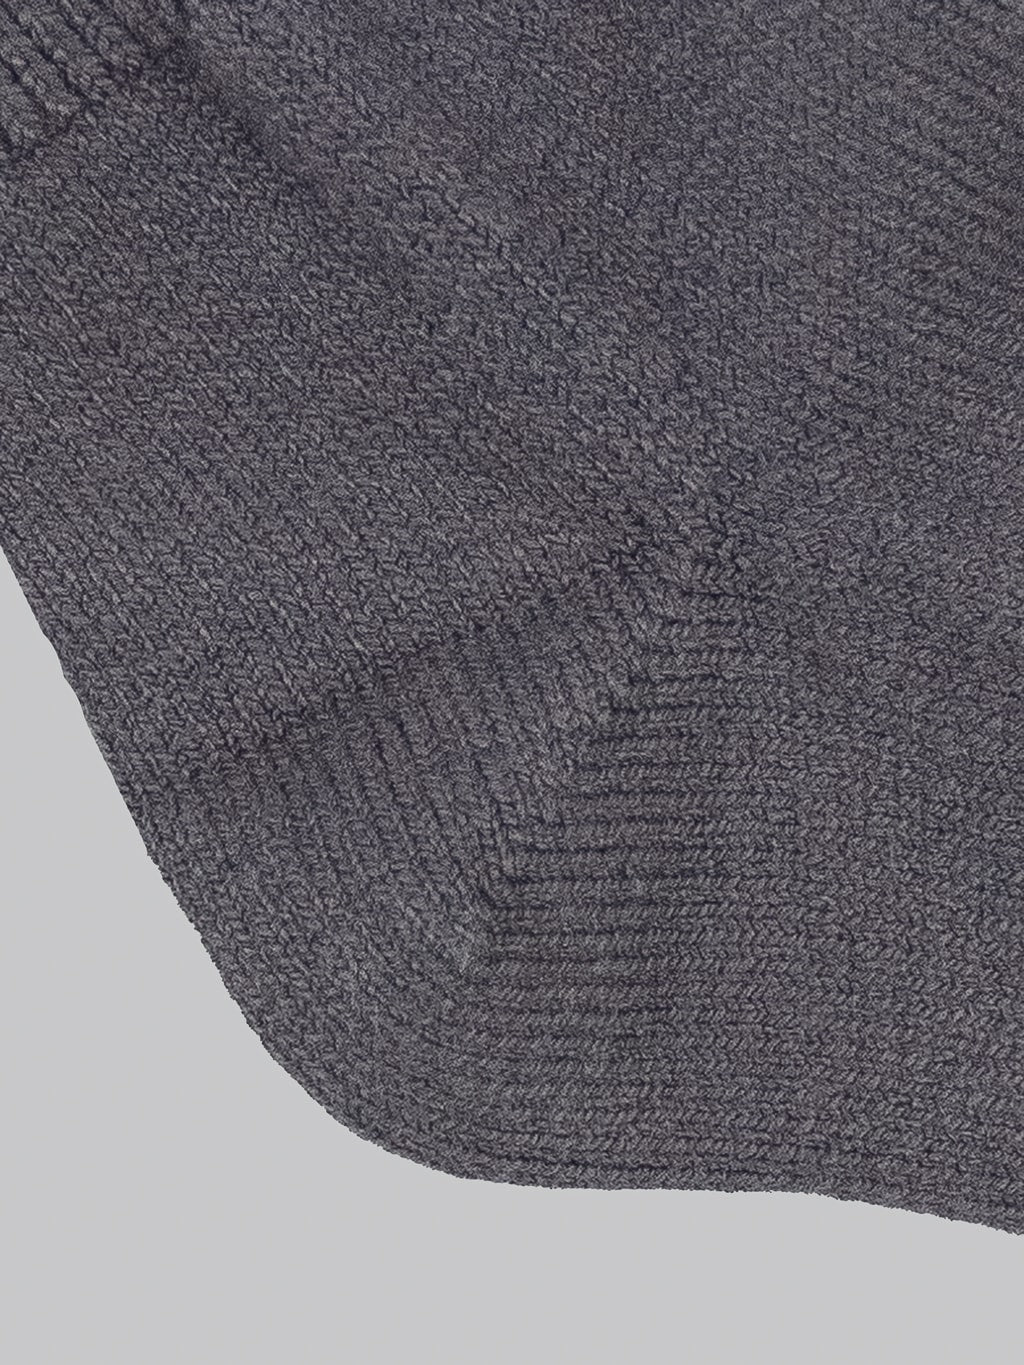 UES Yarn Unevess Three Ply Socks Grey fabric texture